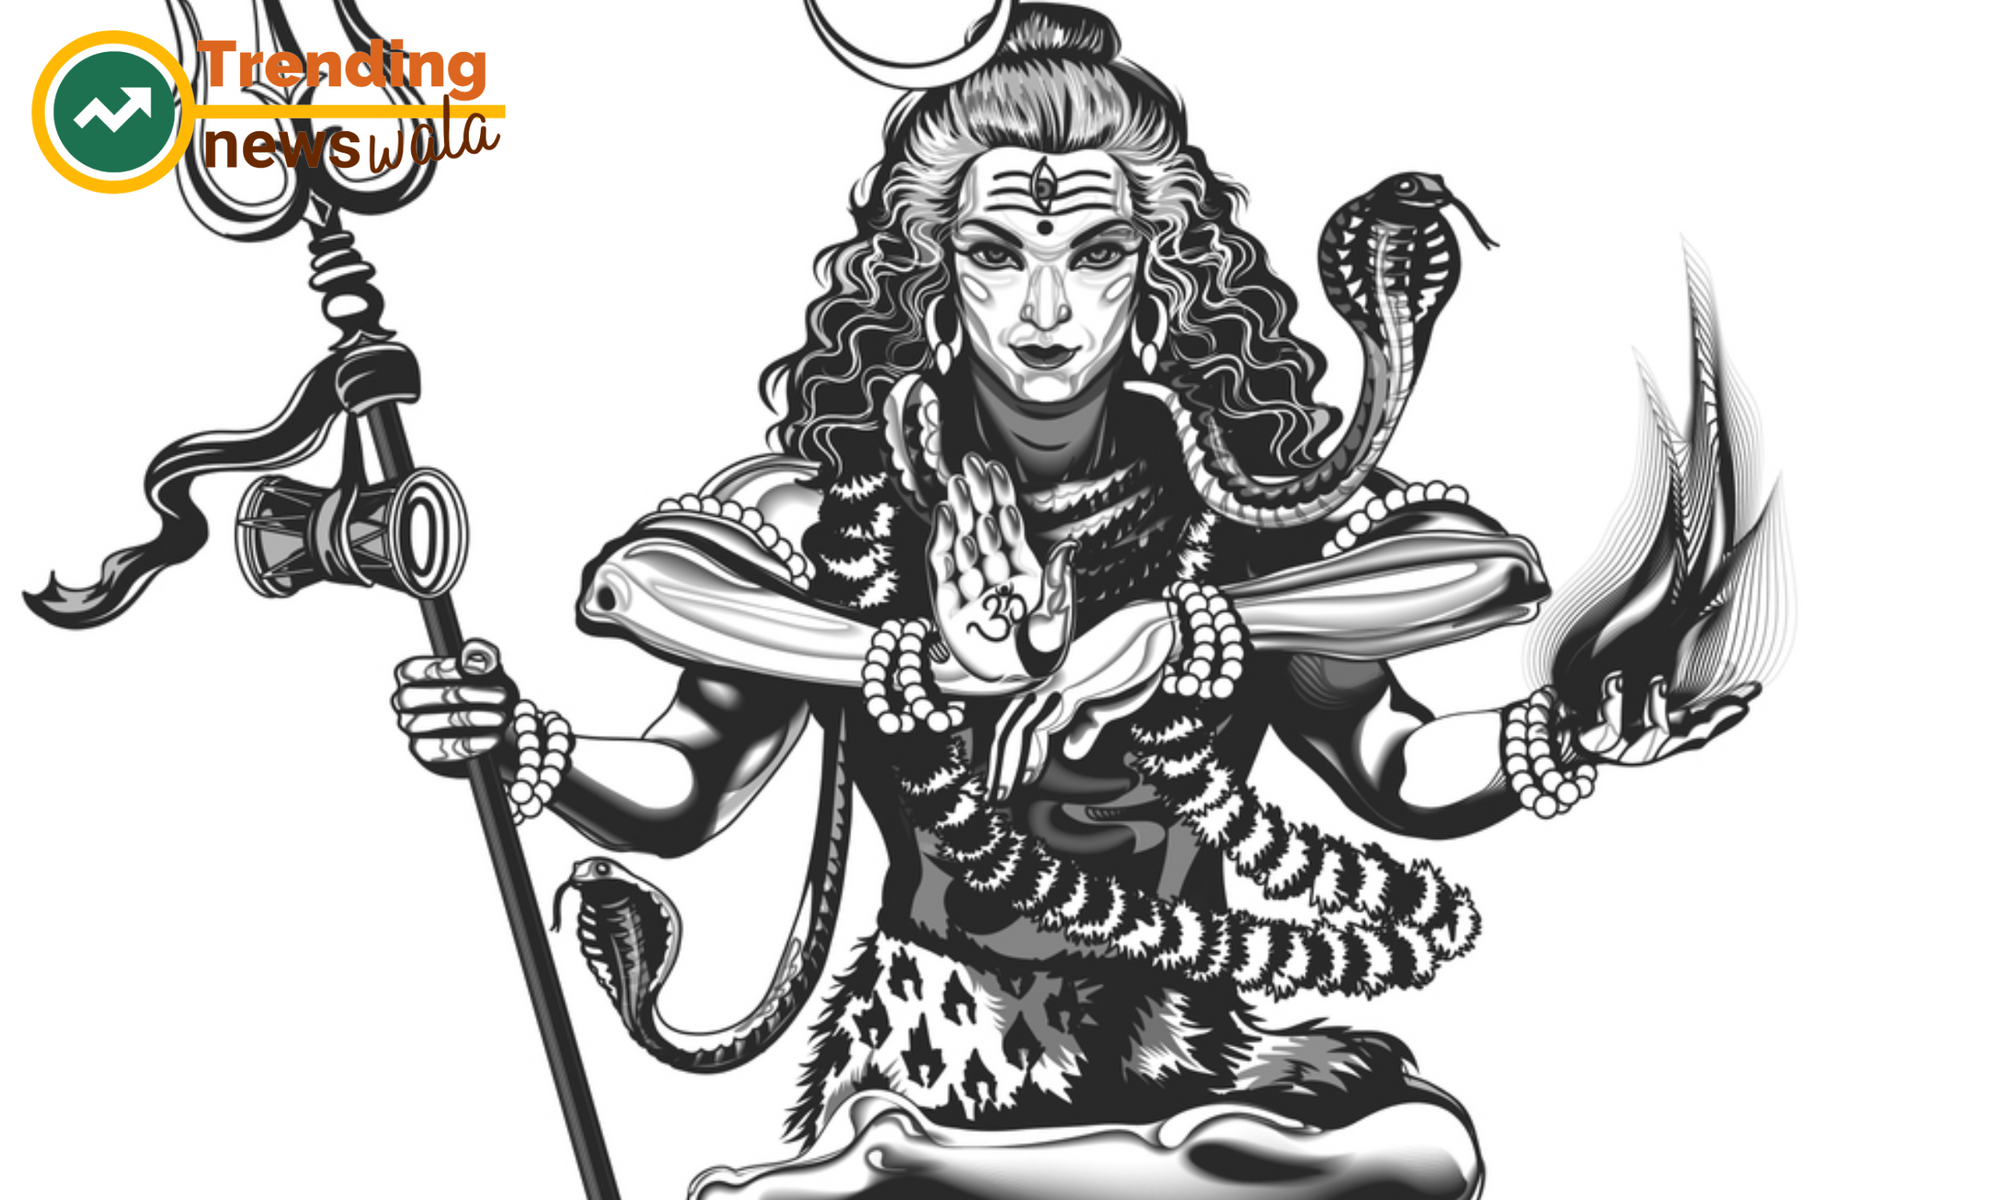 The iconic representation of Shiva